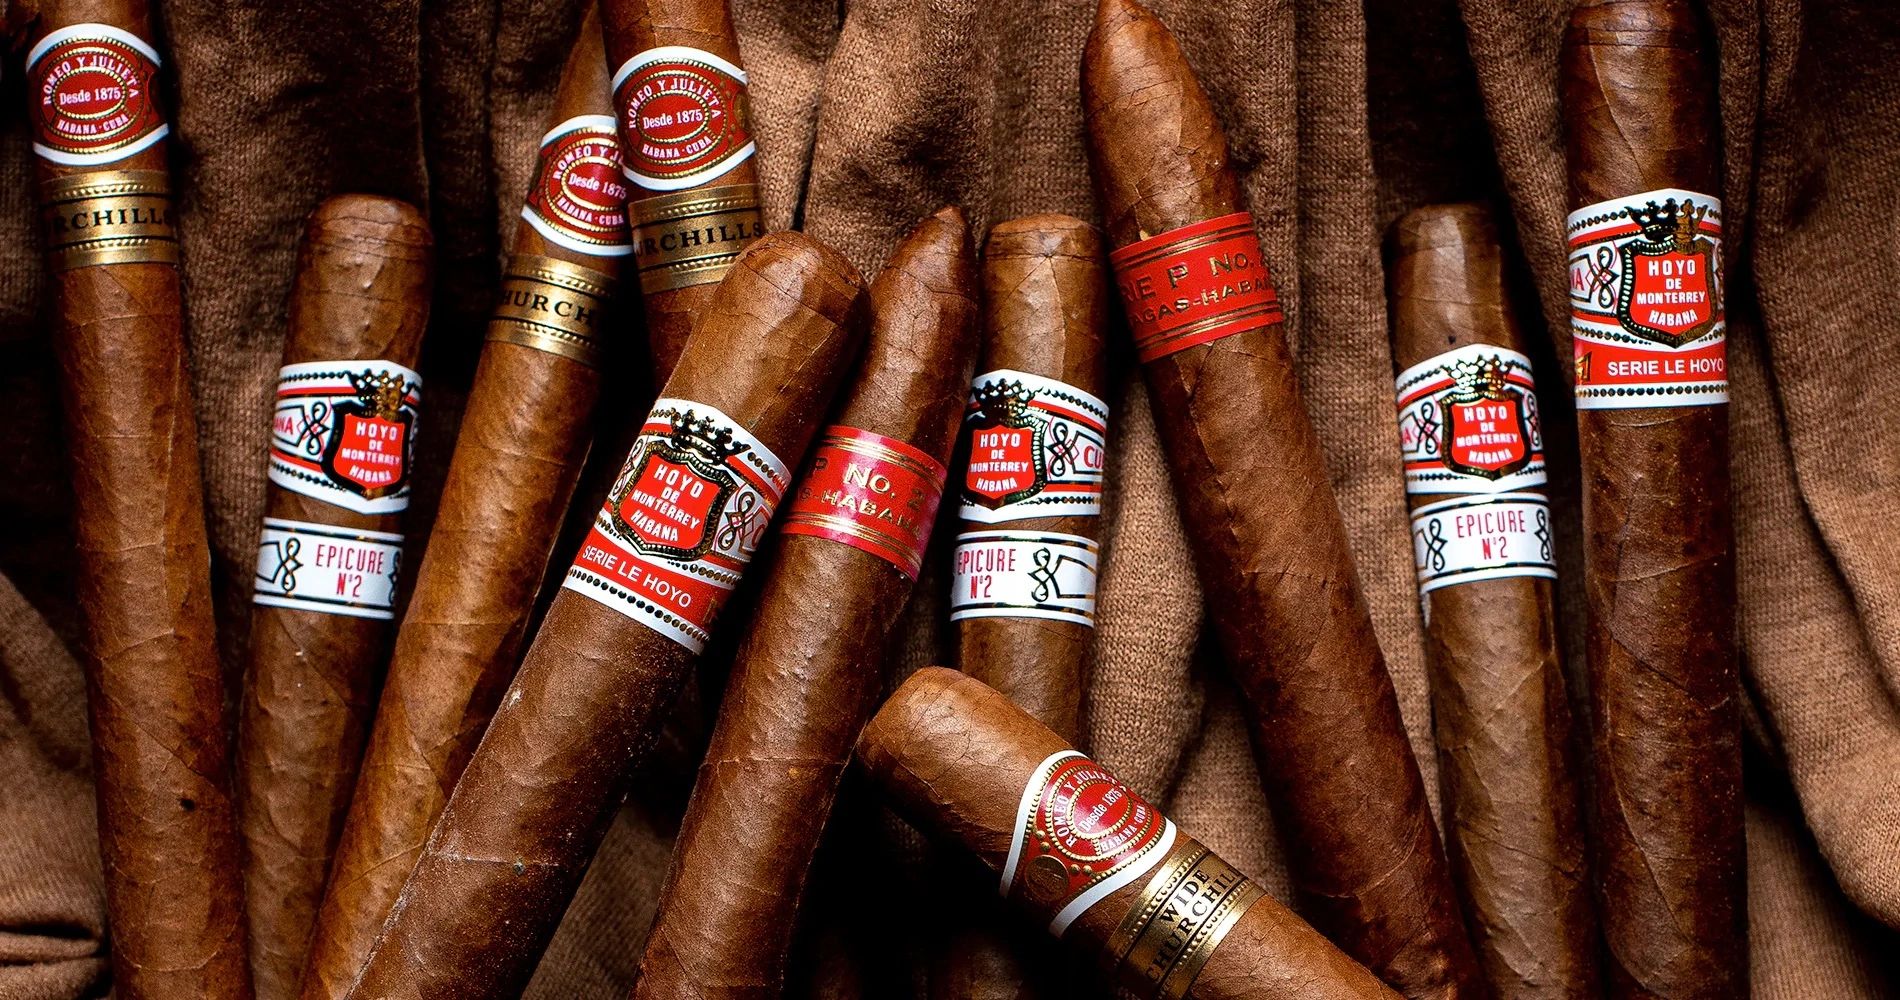 Arcadia Cigars